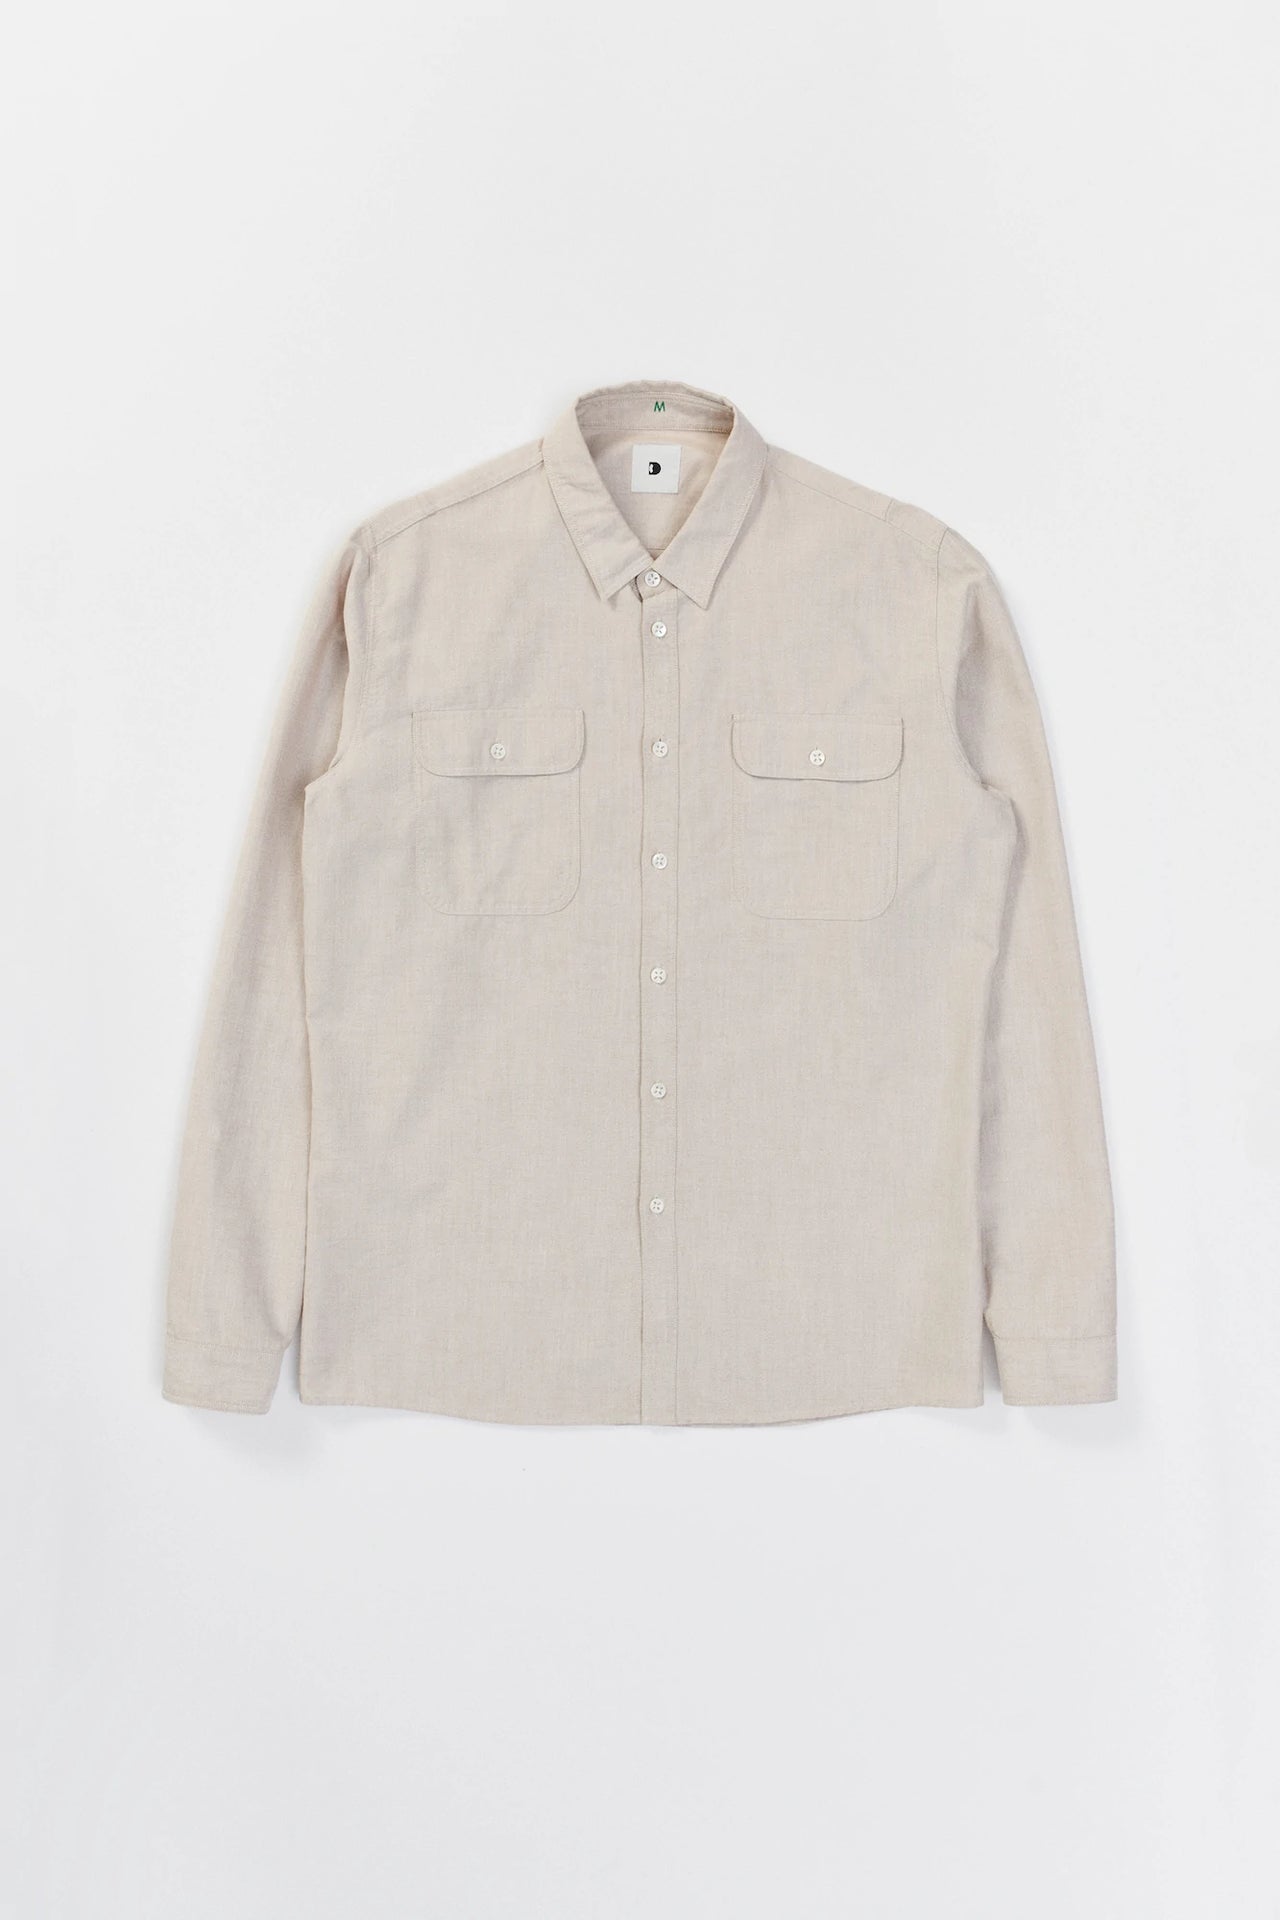 Proper Double Pocket Shirt in a Beige Portuguese Oxford Cotton